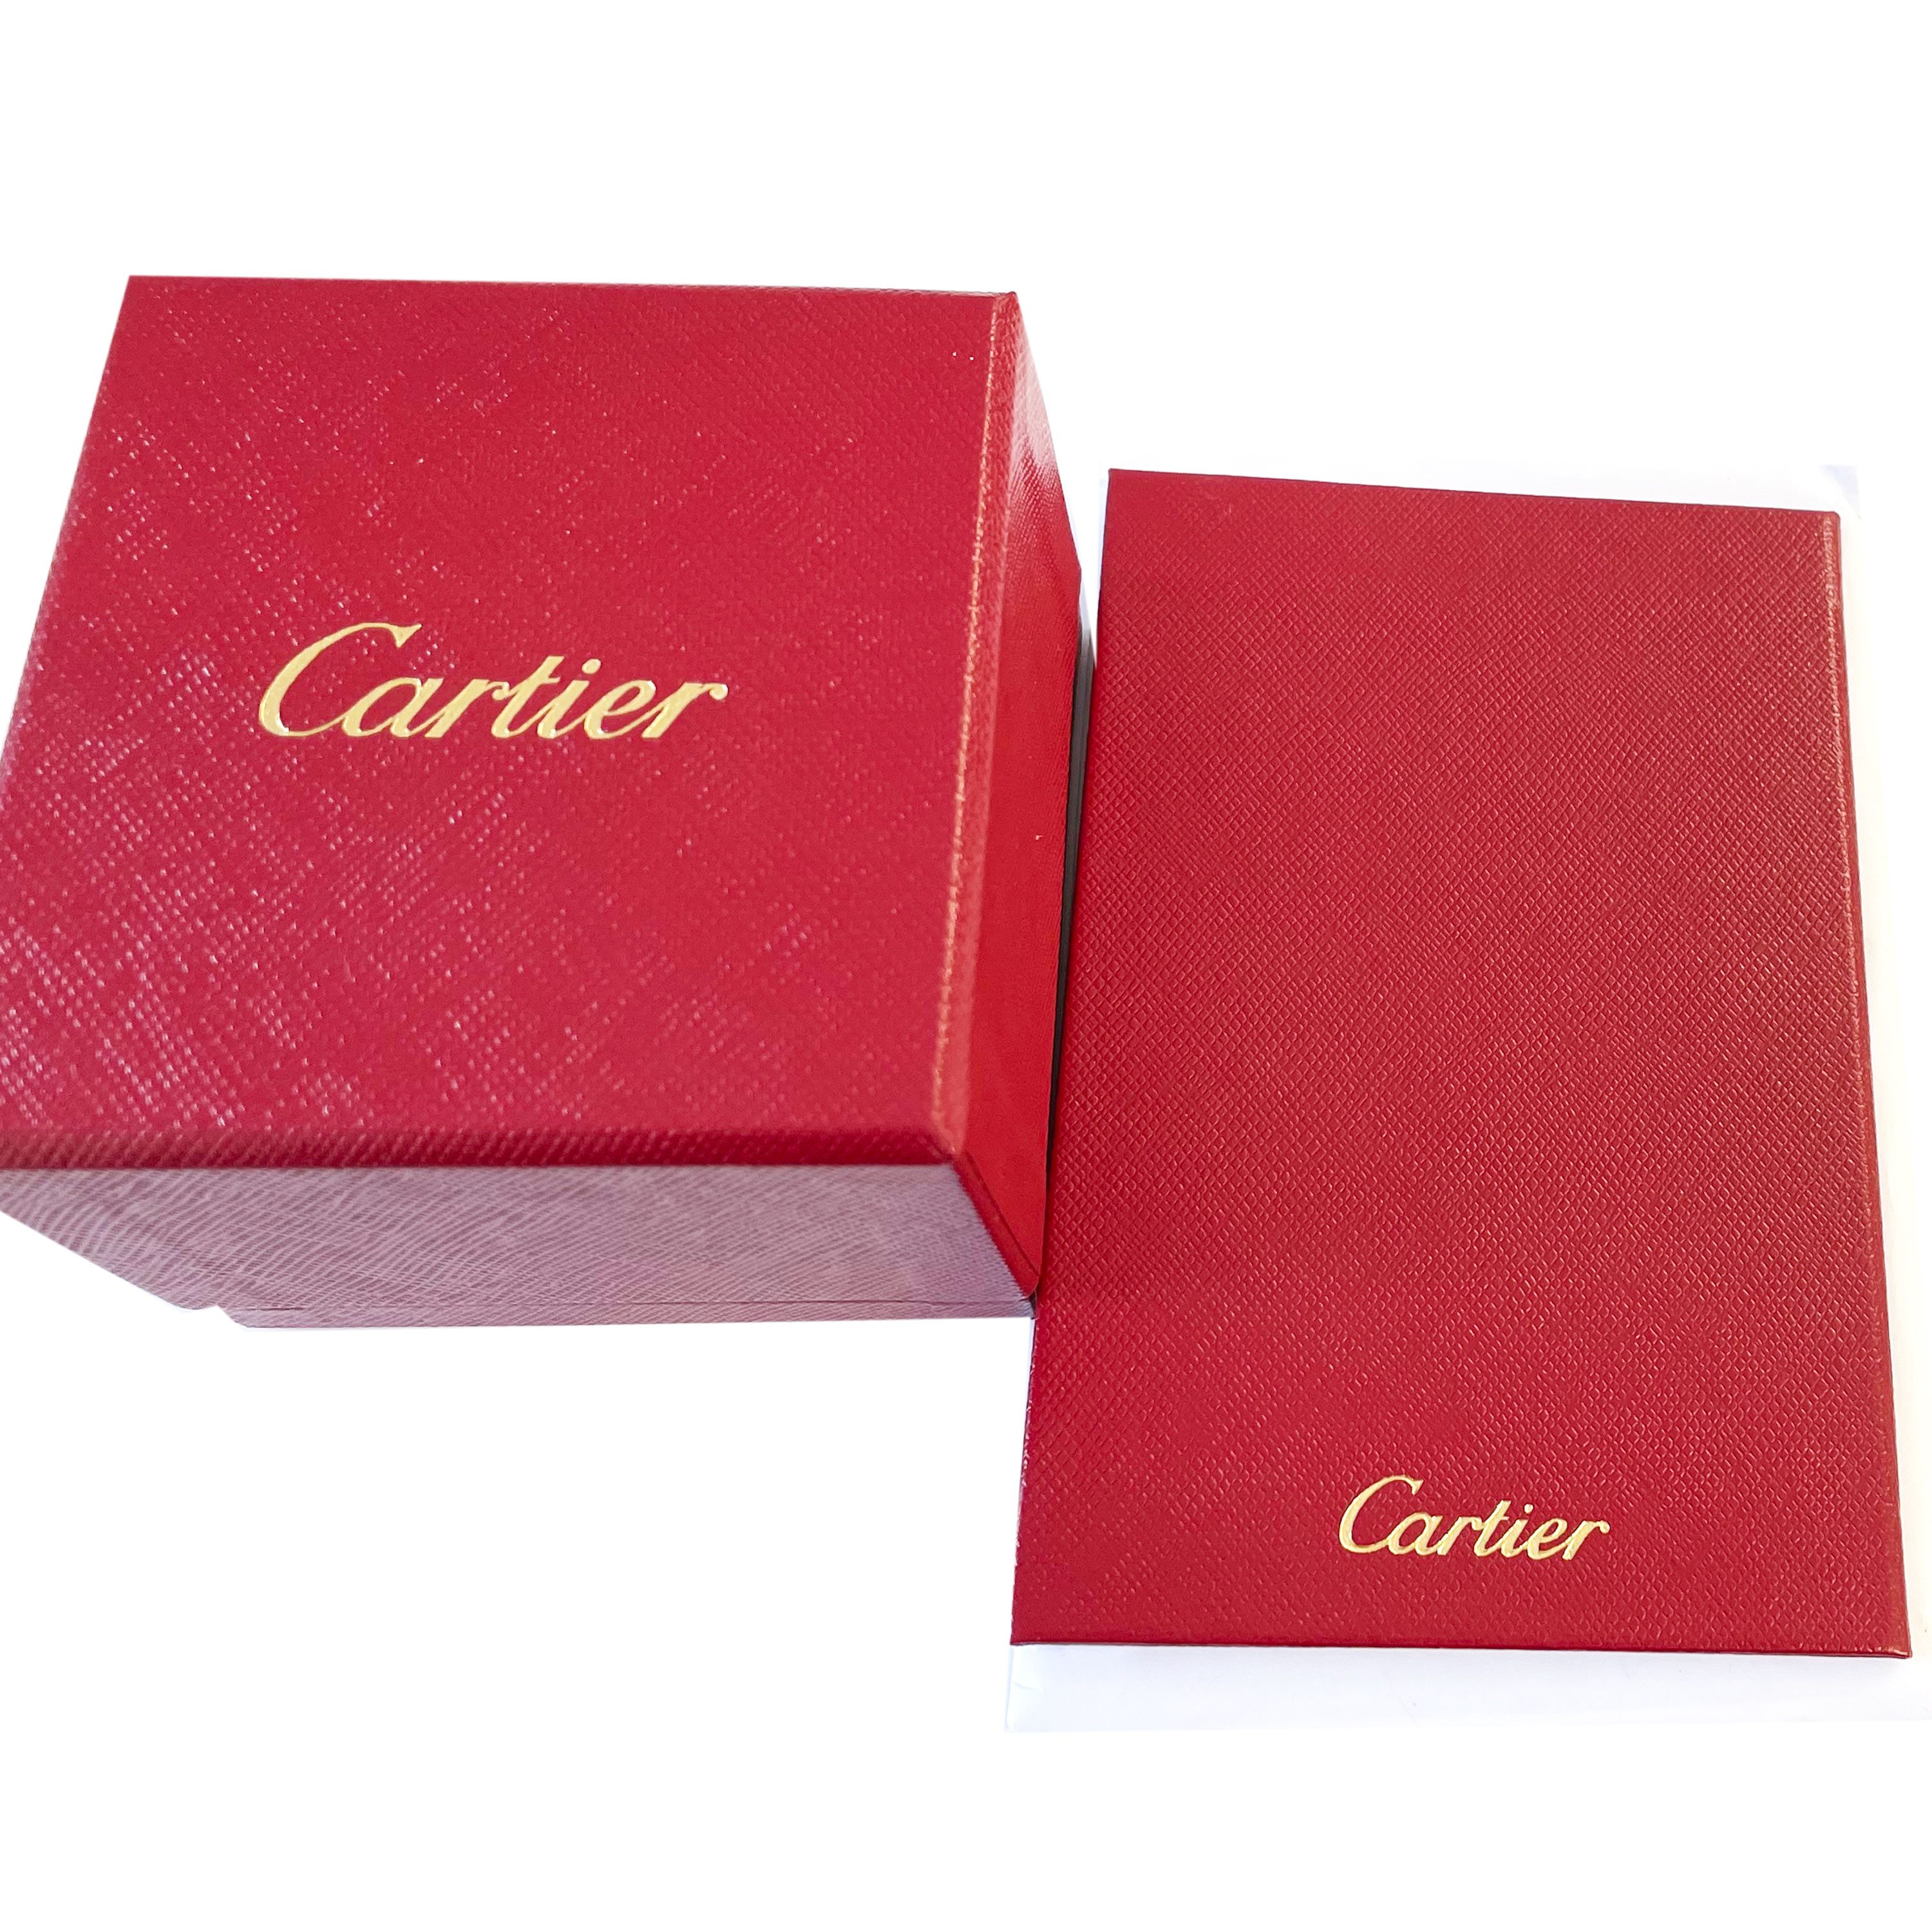 Cartier Love Diamond Wedding Band In 18k Rose Gold 0.16 CTW Ring EU 50